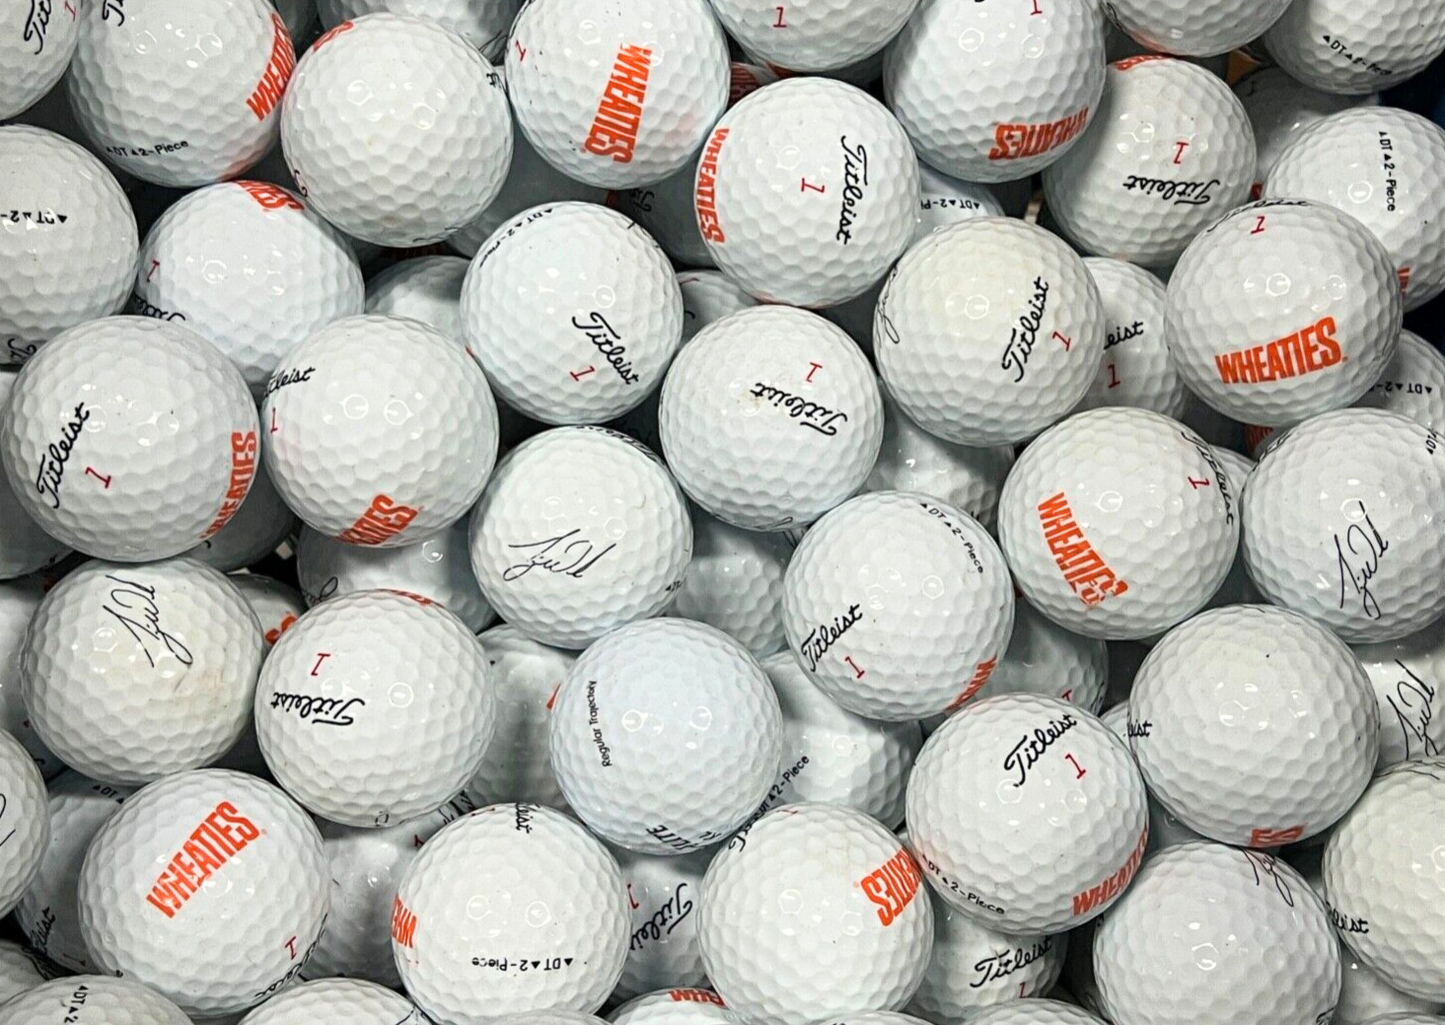 Tiger Woods Wheaties Signature Used Golf Balls